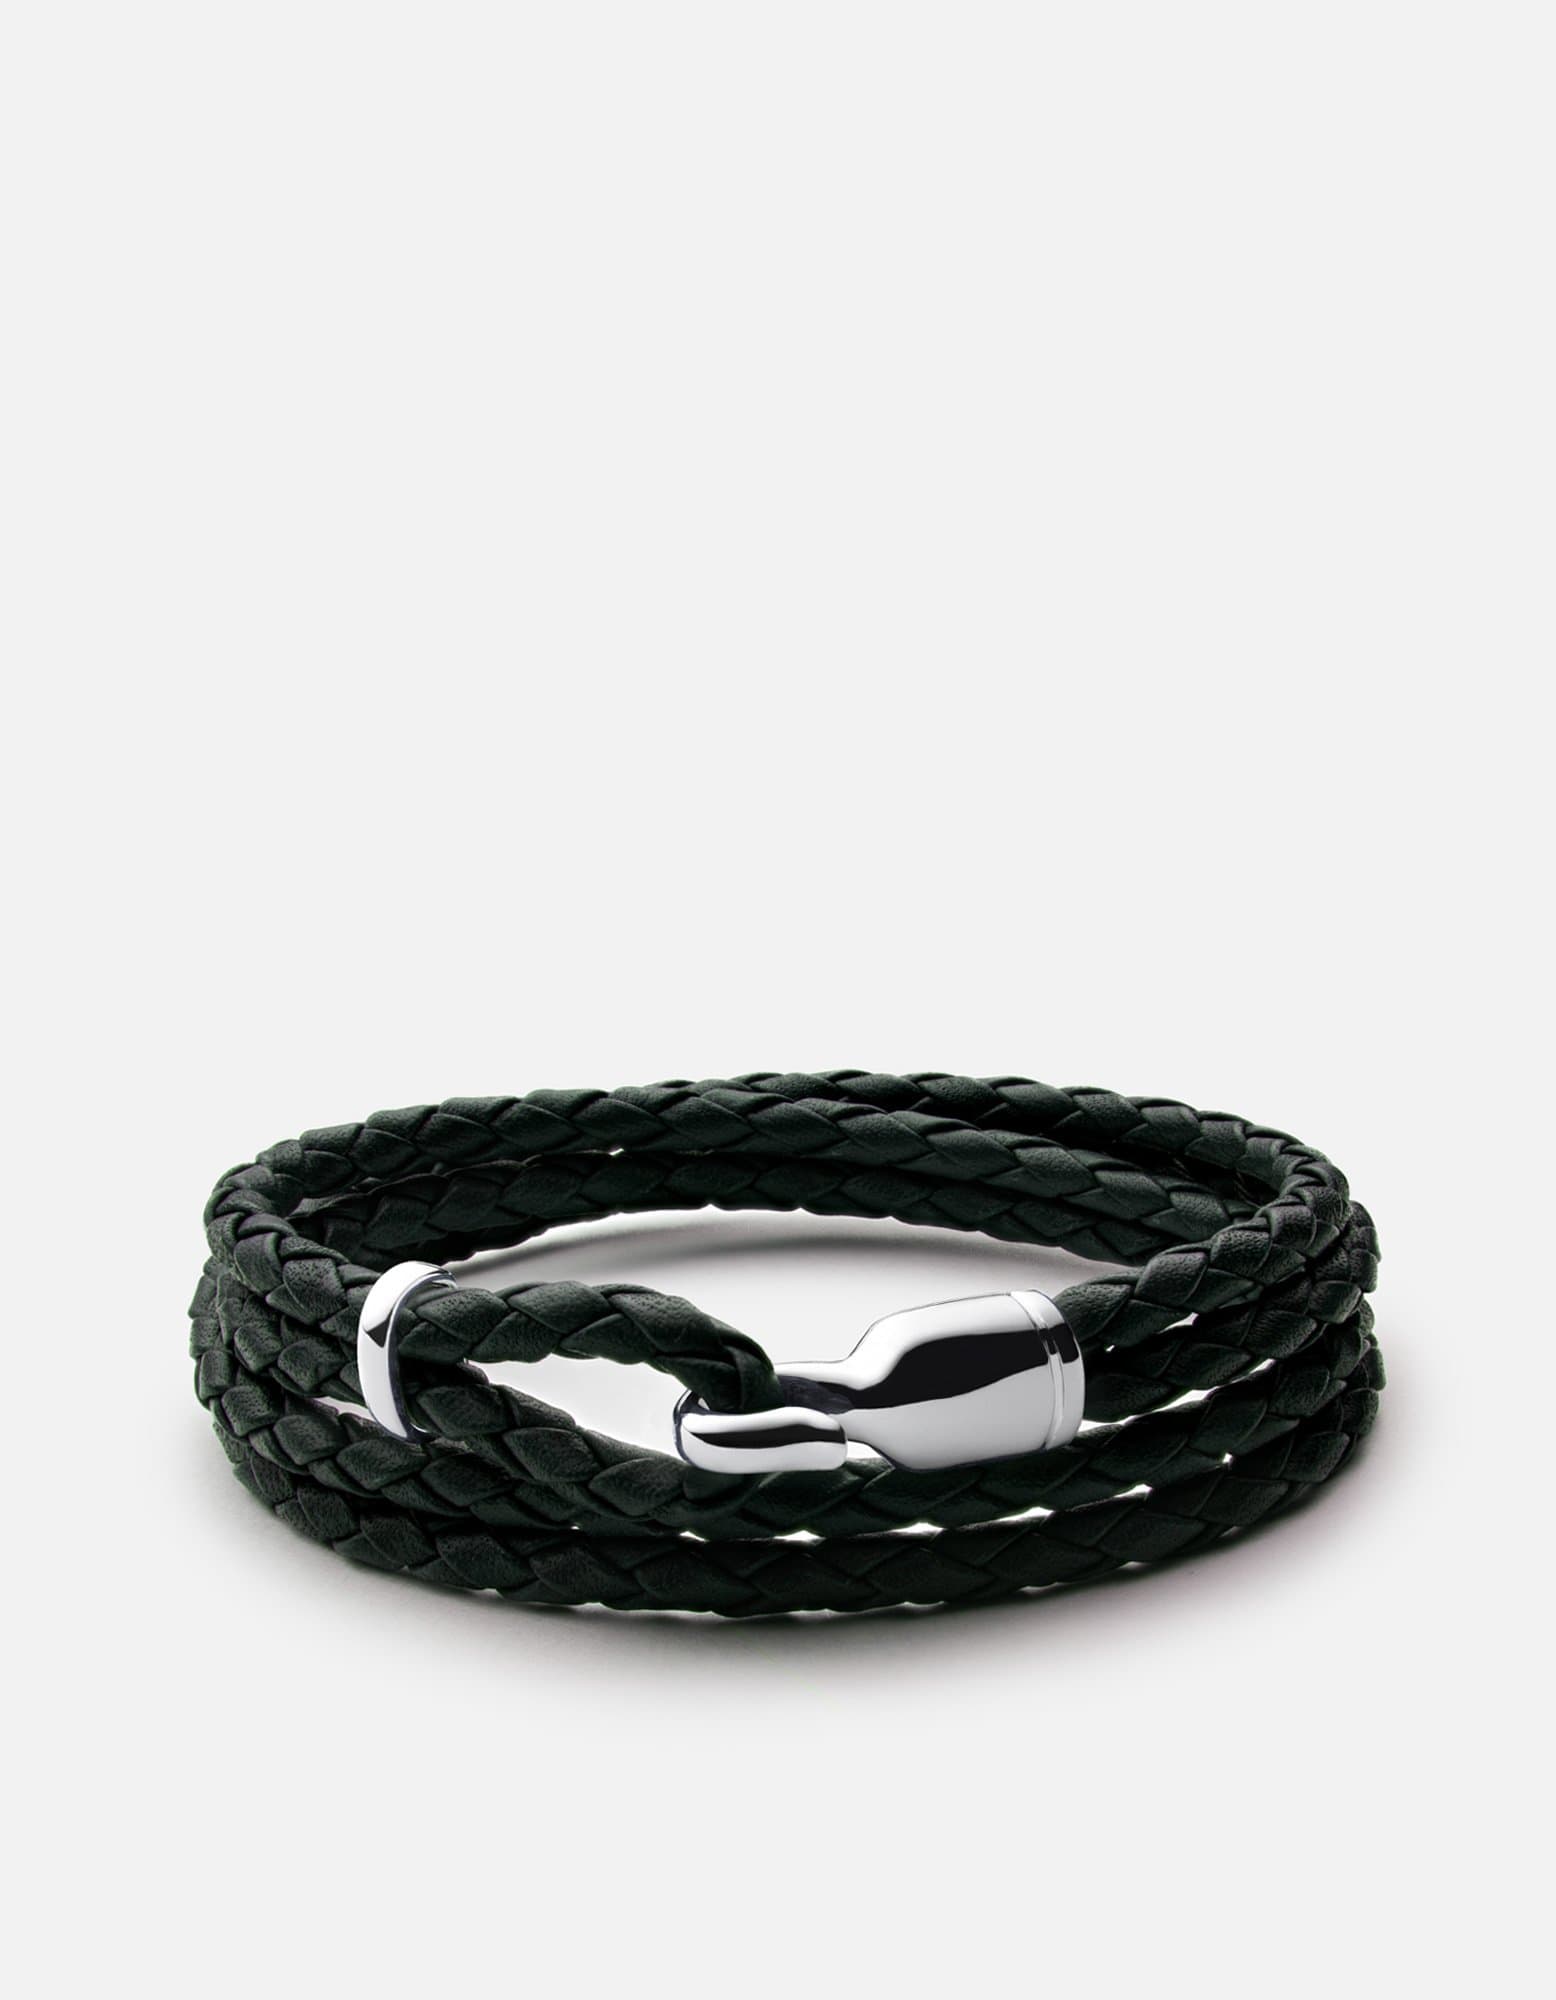 Trice Bracelet, Sterling Silver | Men's Bracelets | Miansai